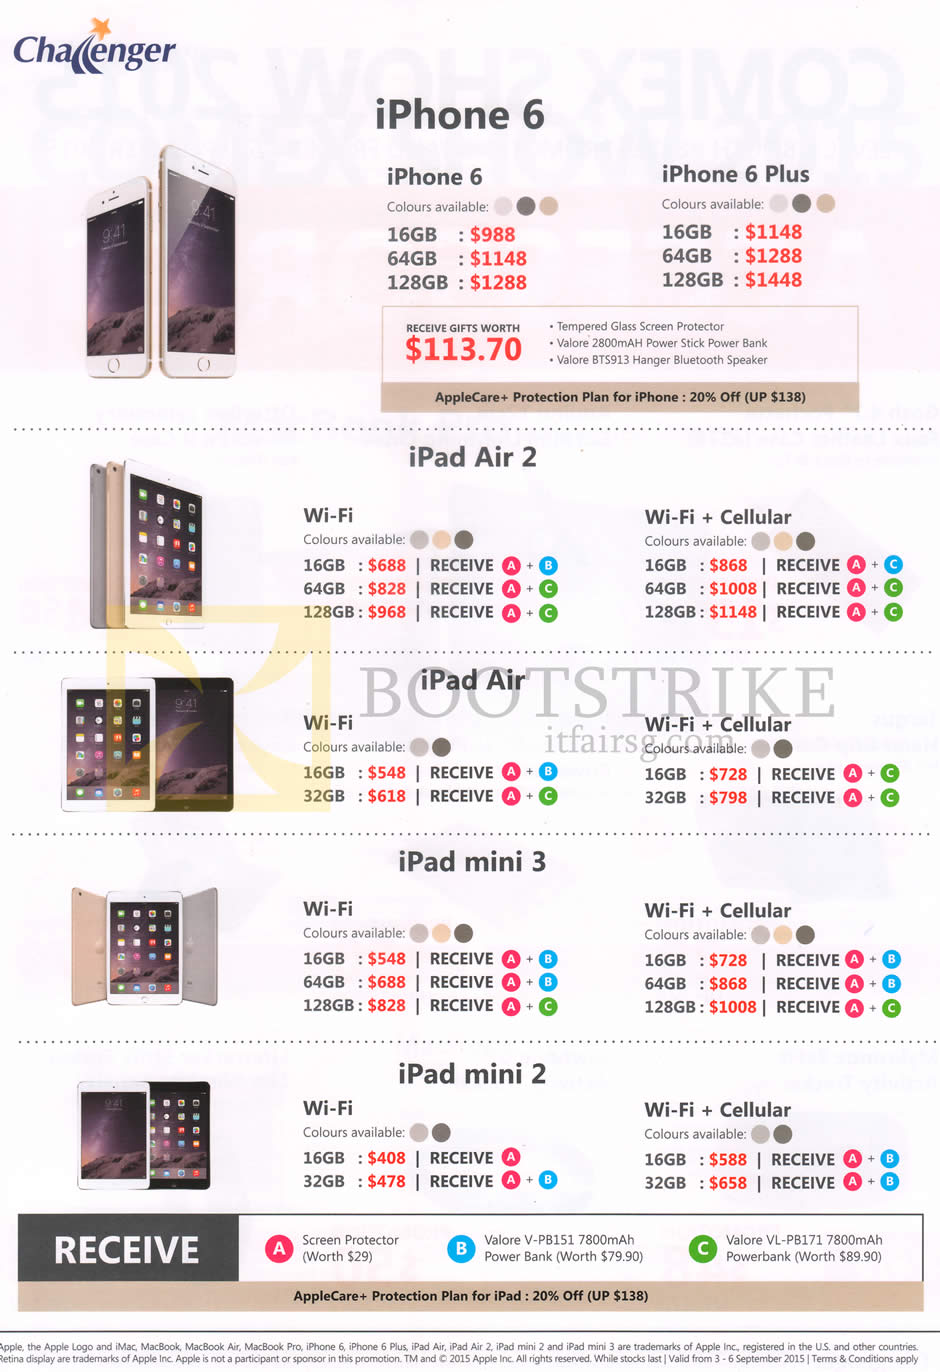 COMEX 2015 price list image brochure of Challenger Apple Mobile Phones, Tablets, IPhone 6, 6 Plus, IPad Air 2, Air, Mini 3, Mini 2